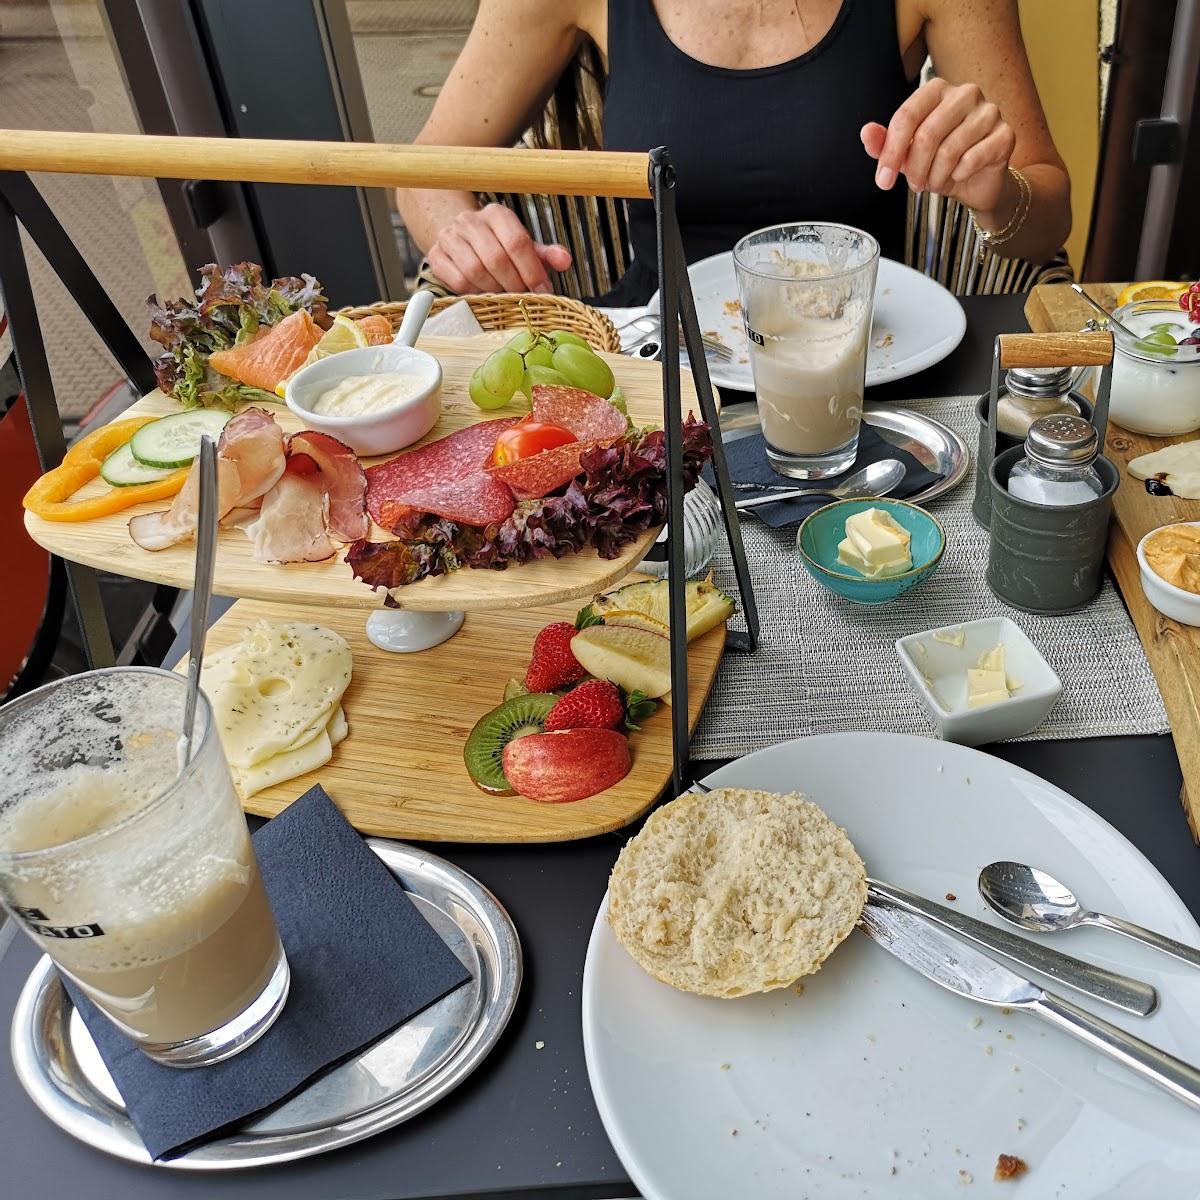 Restaurant "Cafe Central" in Schwarzenfeld